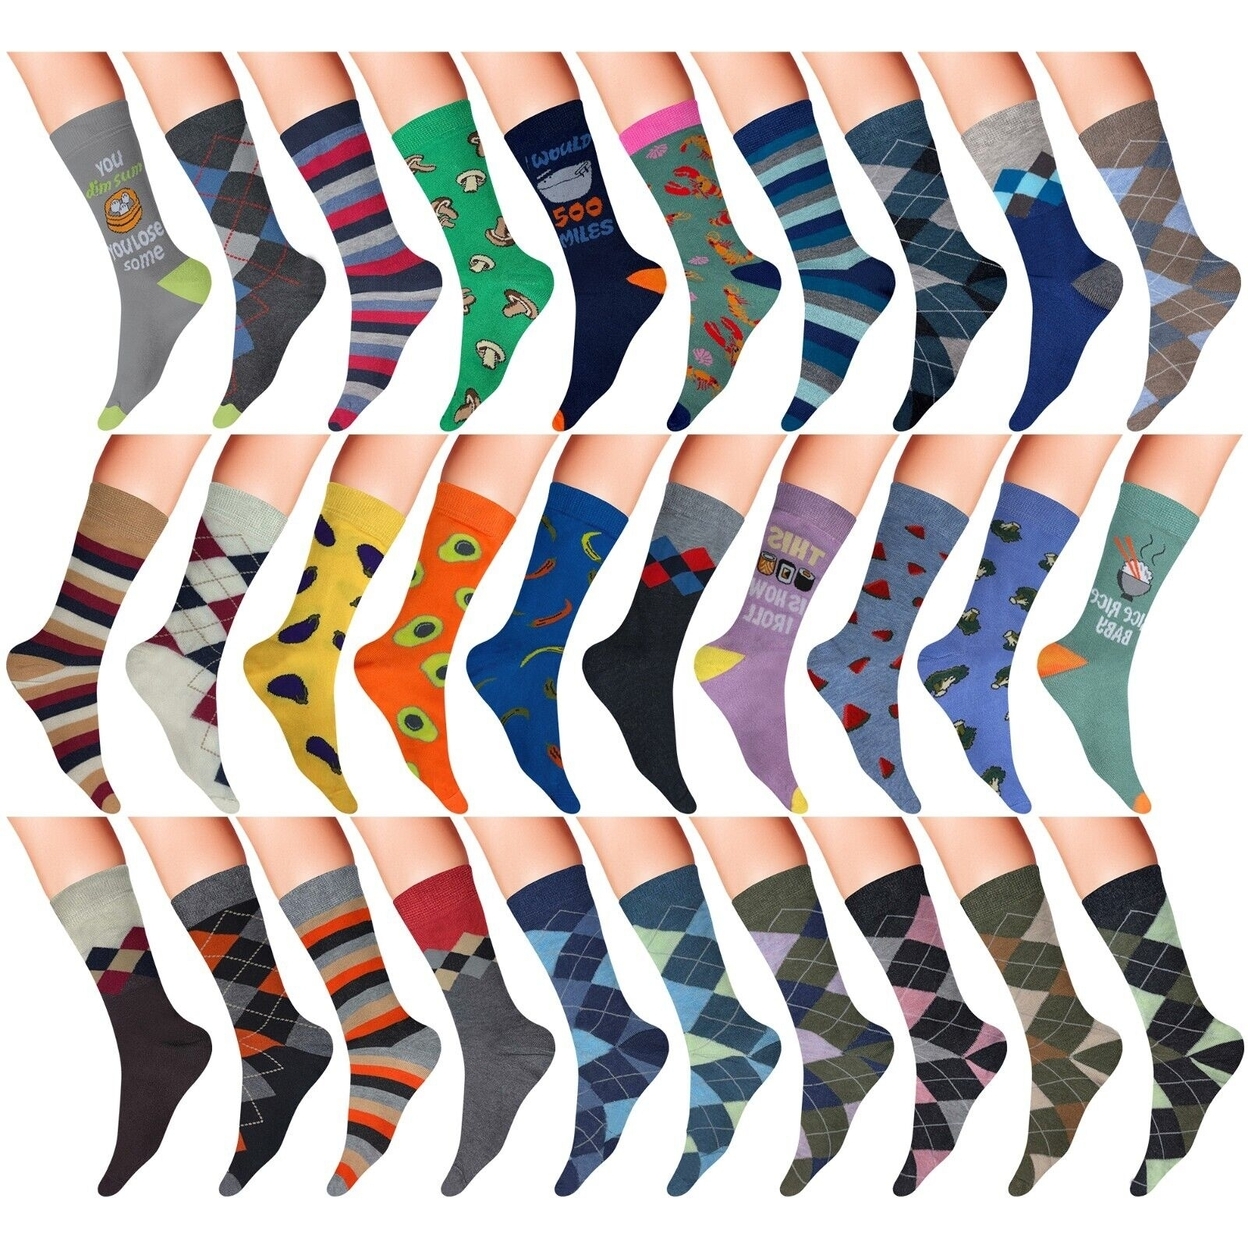 12-Pairs: Men's James Fiallo Premium Quality Fun Printed Dress Socks - Solid